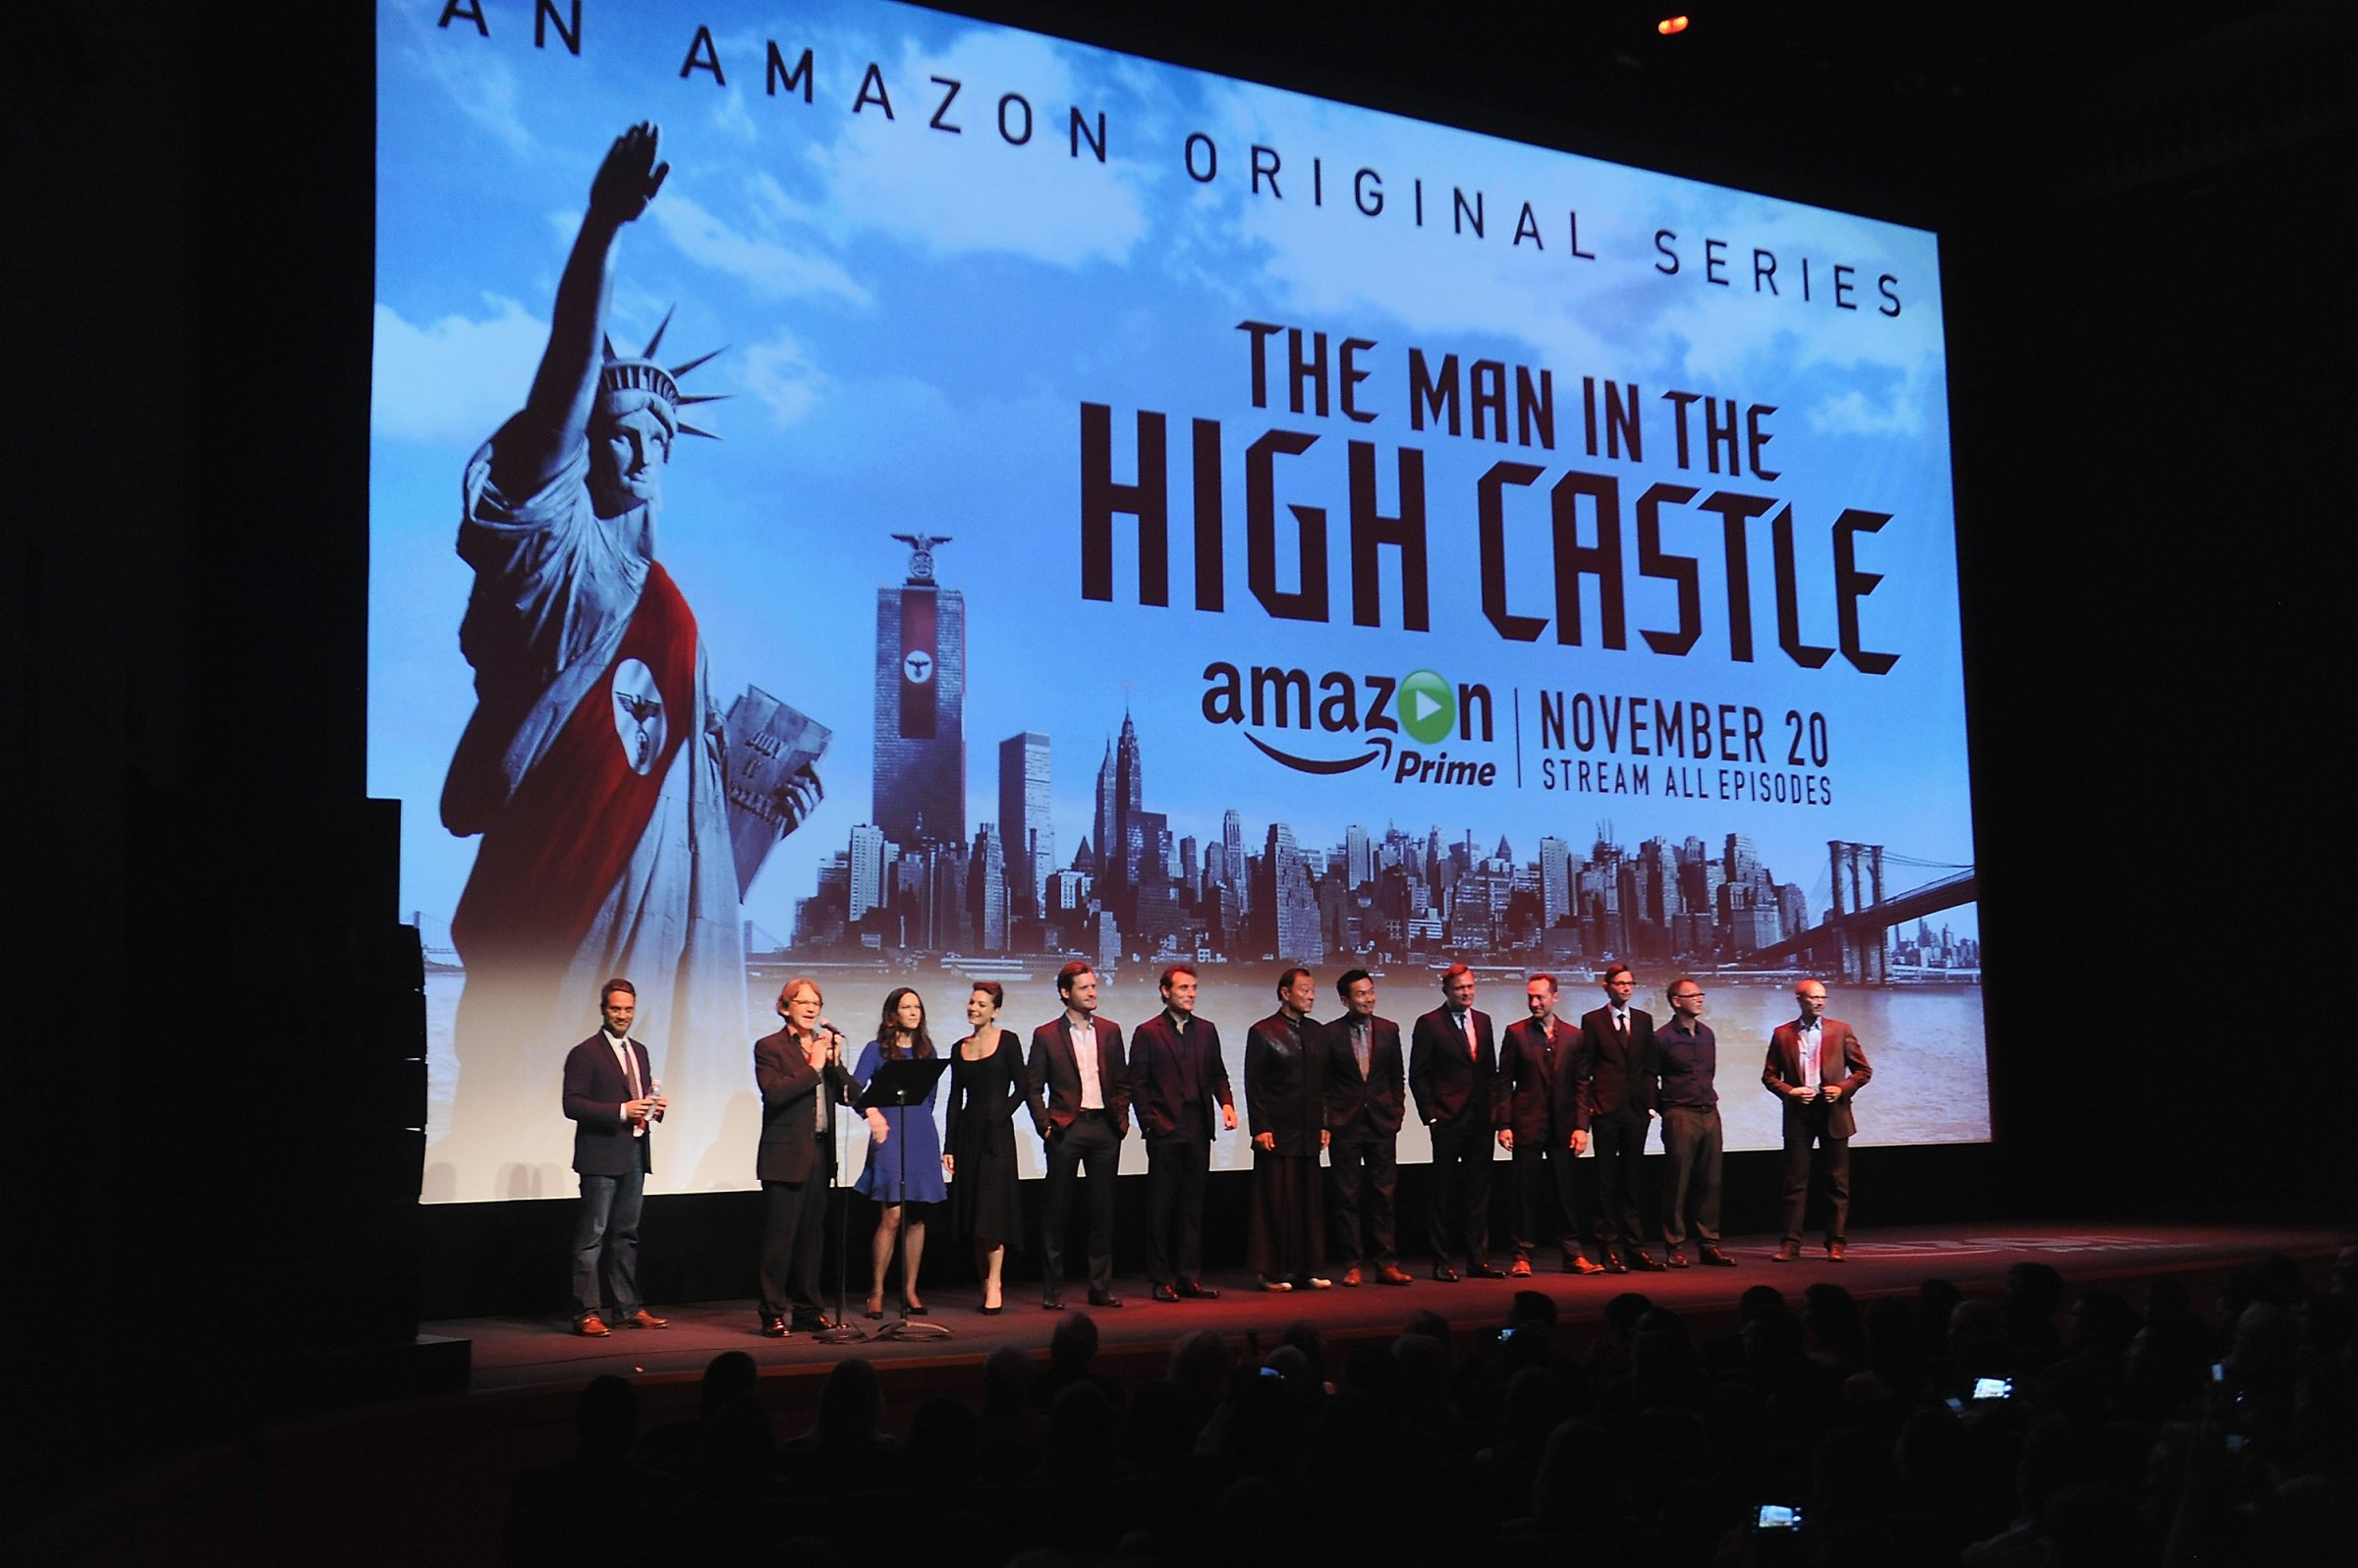 NY Premiere Of Amazon Original's "Man In The High Castle"